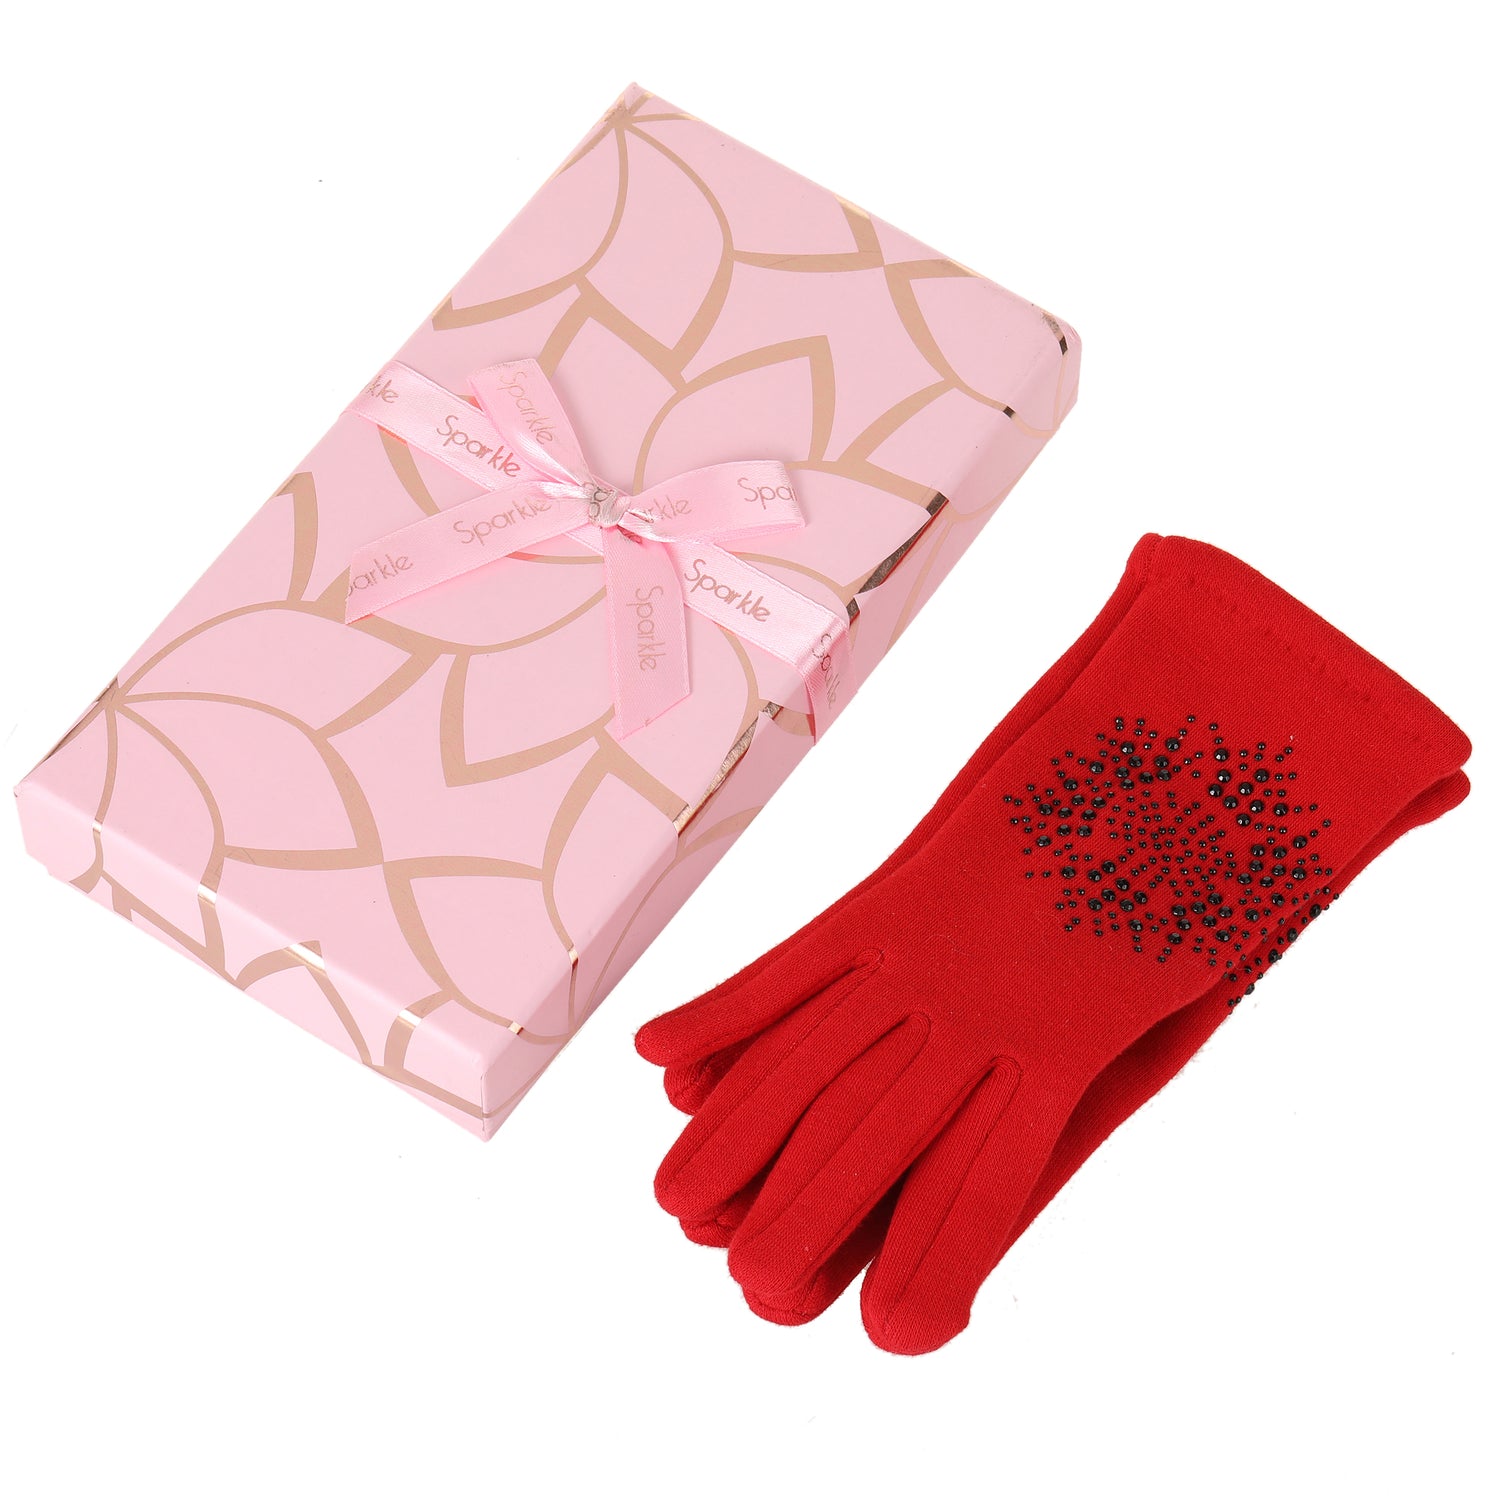 Sparkle Kids Gift Box Gloves - Red